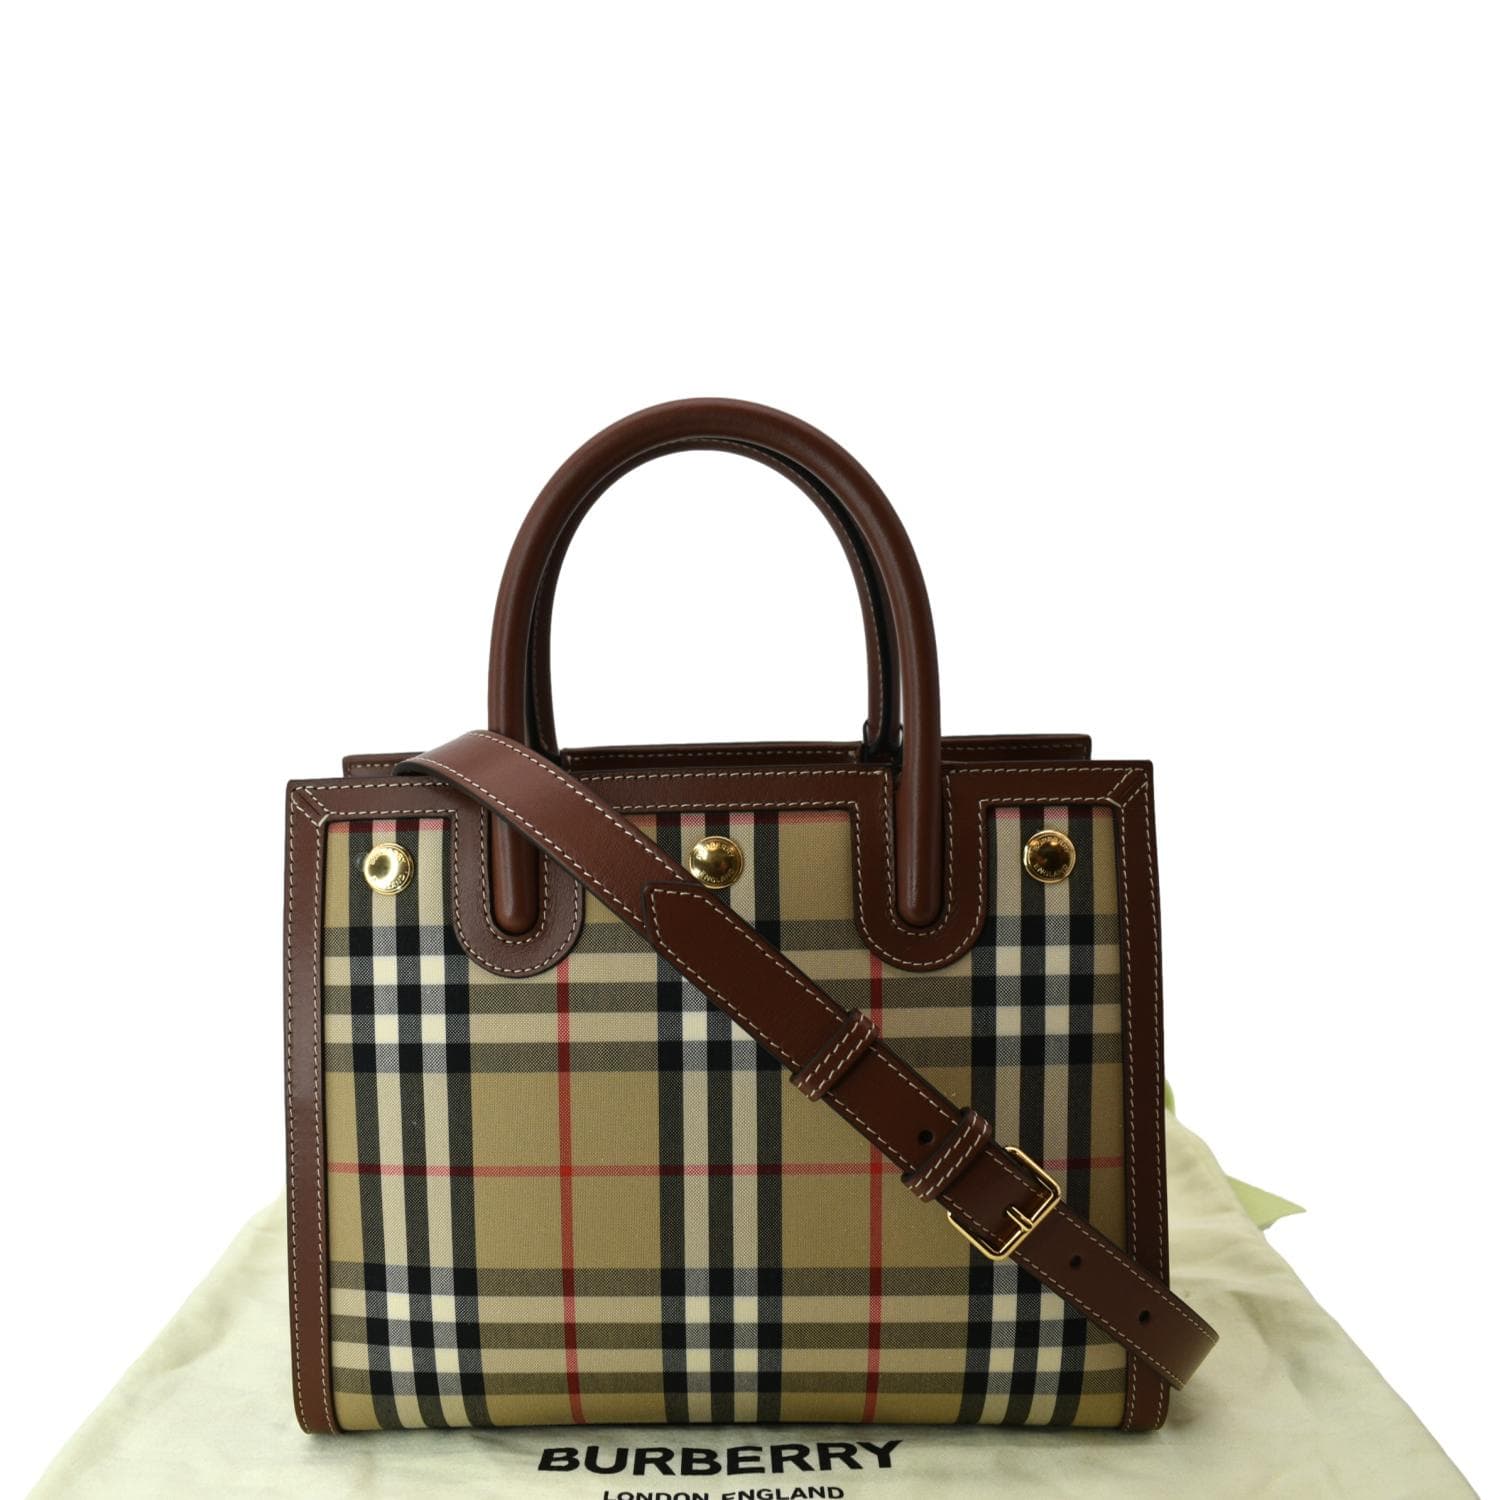 Vintage Burberry classic beige nova check speedy bag style handbag